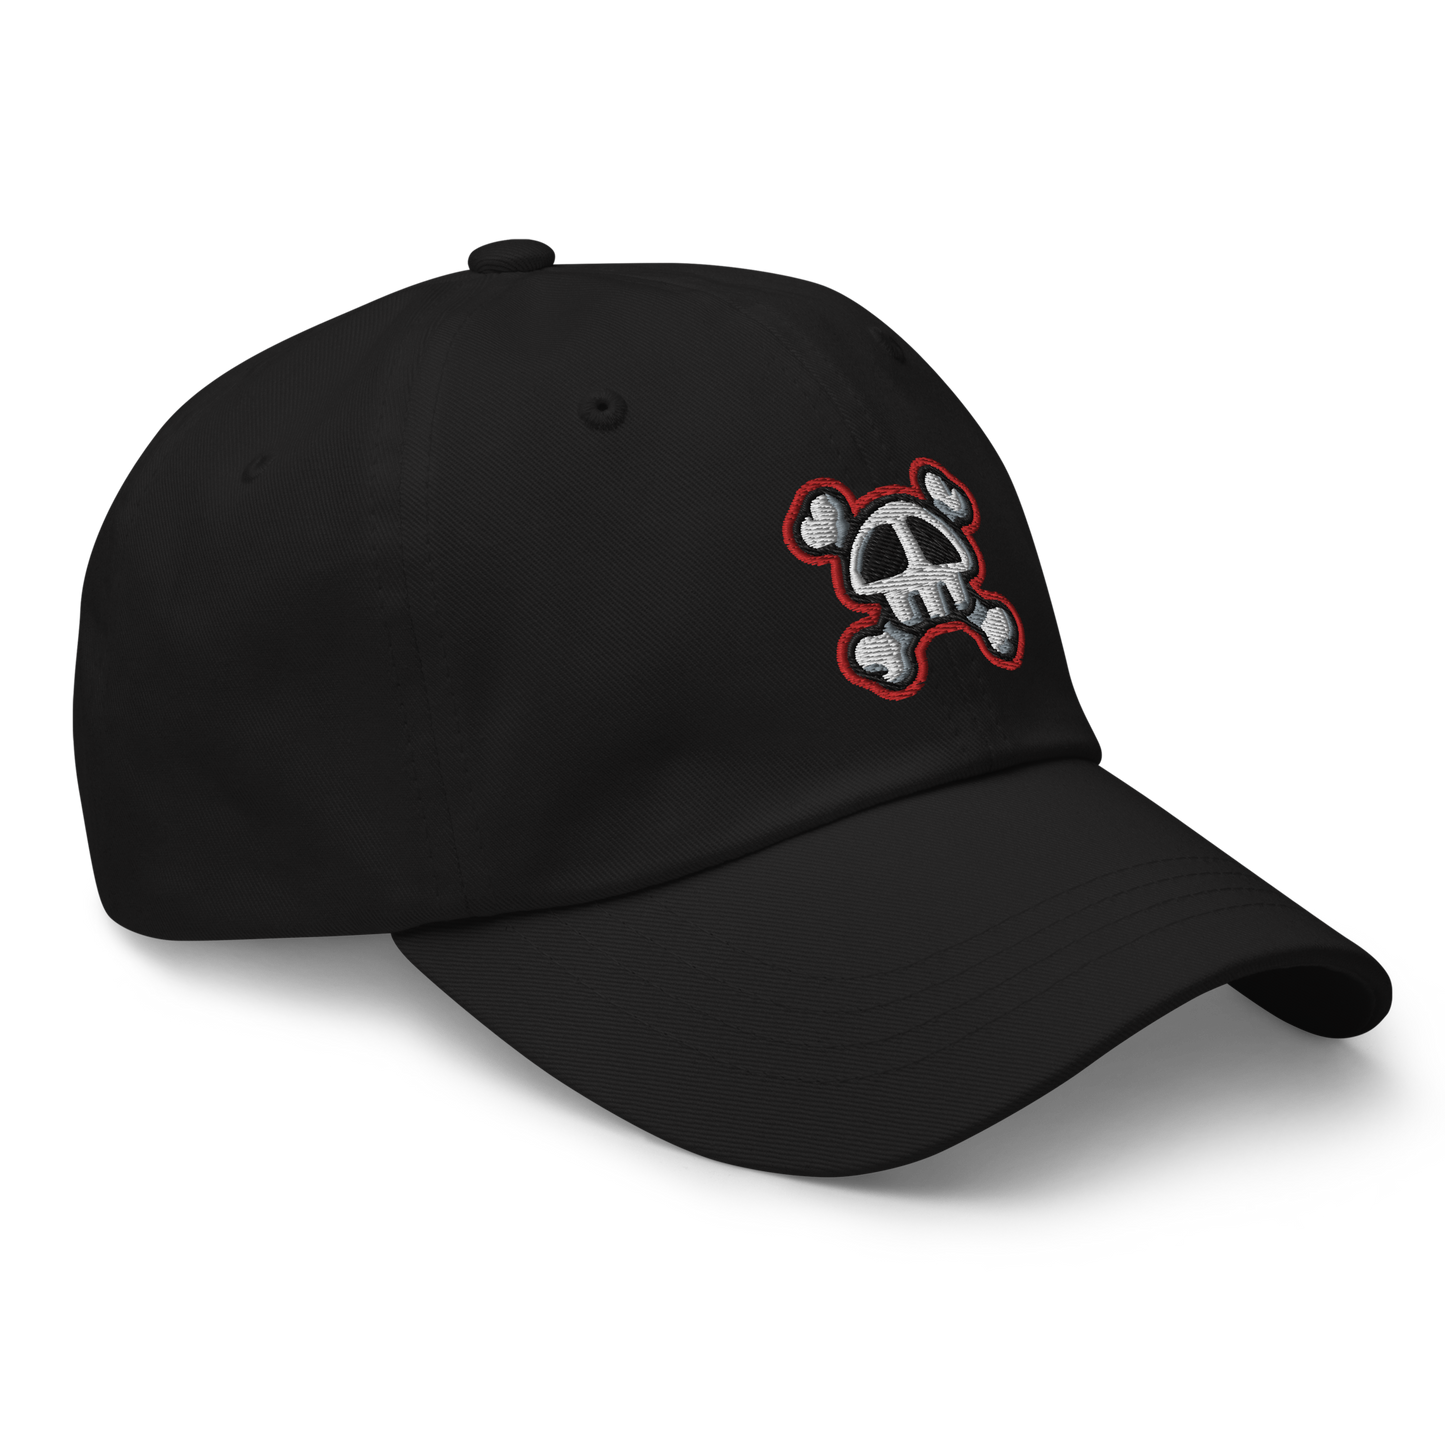 Pirate101-Skull-Island-Icon-Dad-Hat3-embroiderred-black-right